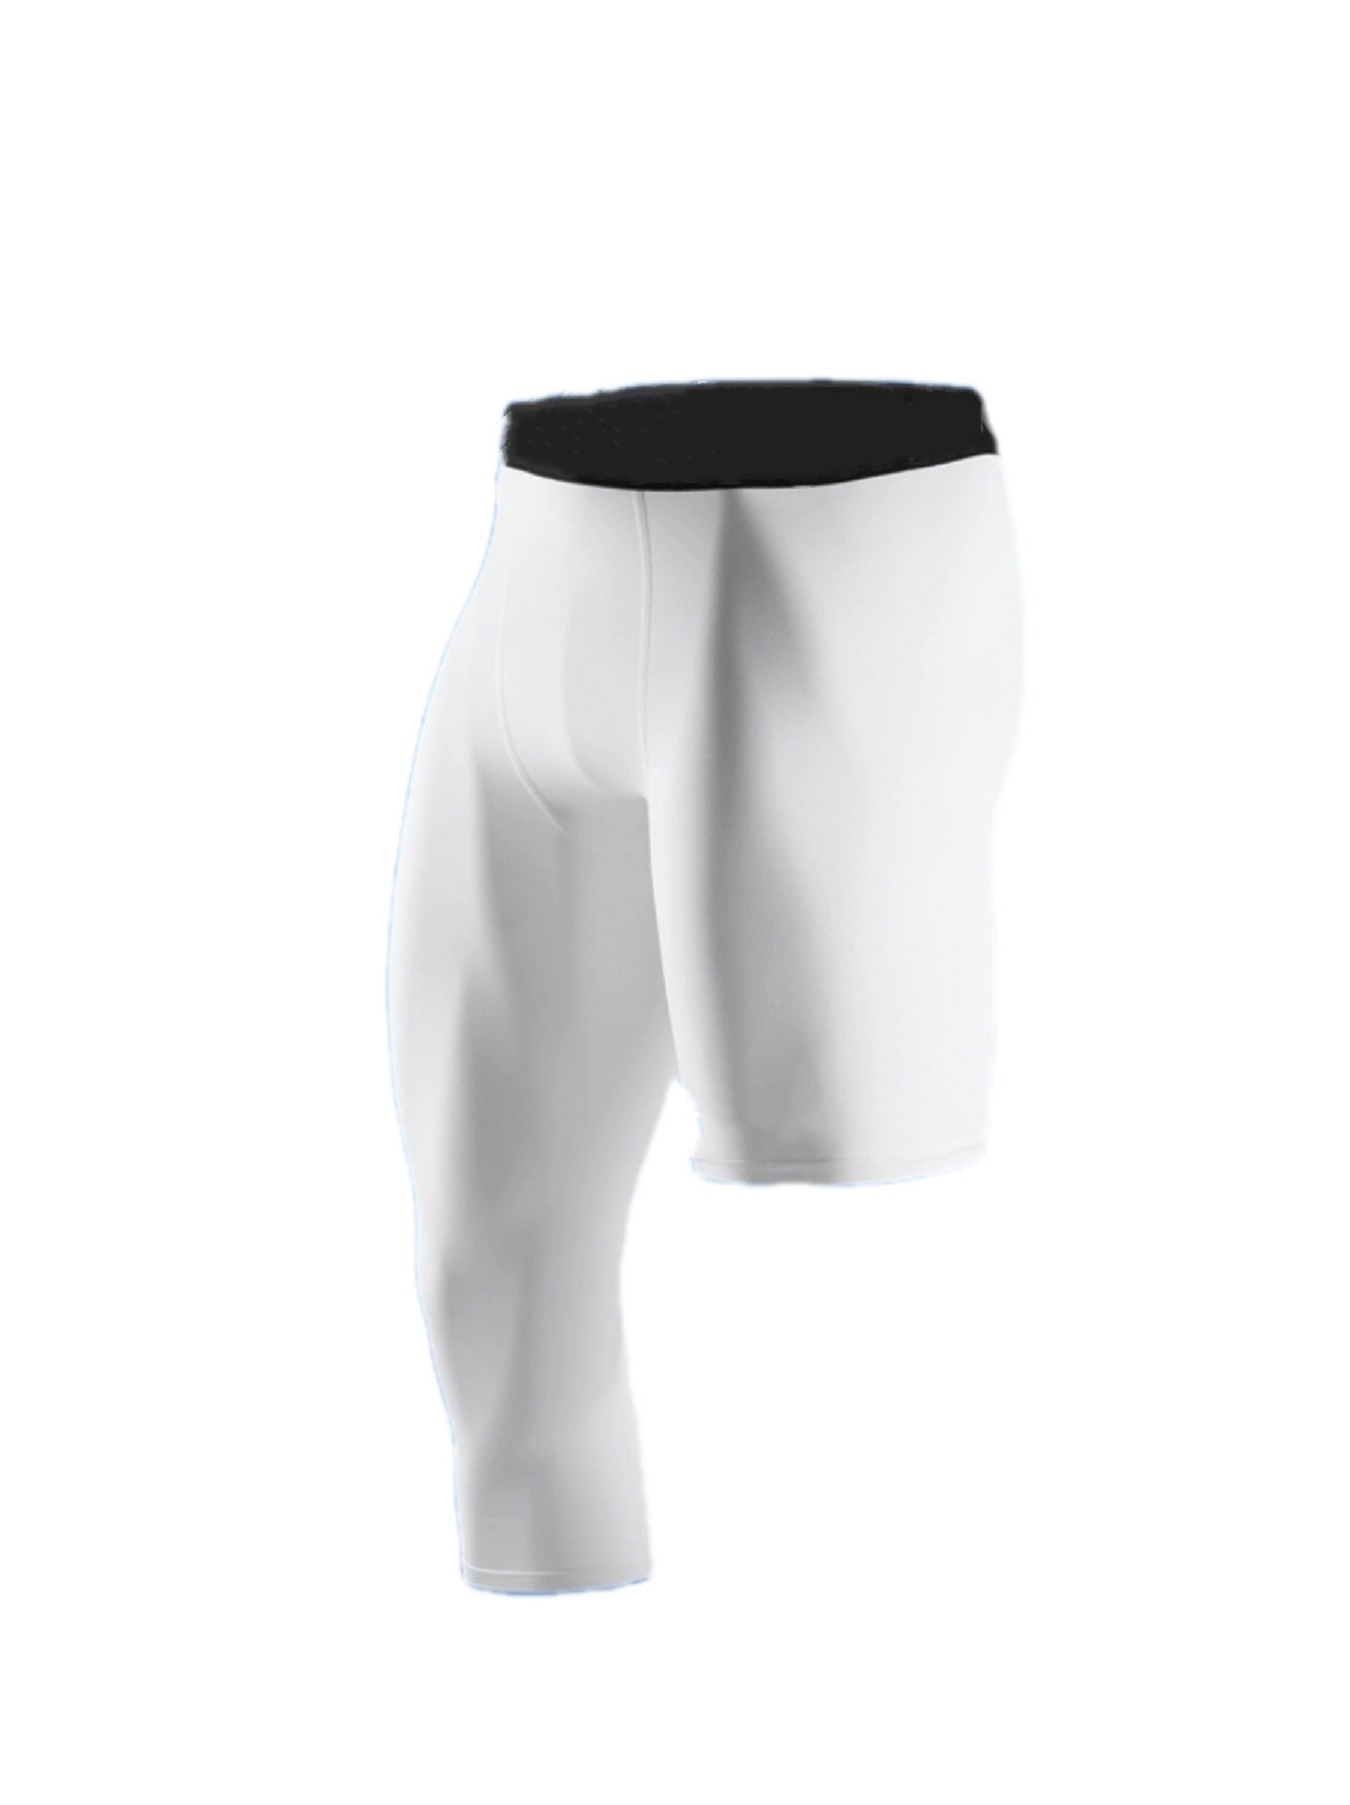 Men's One Leg Compression 3/4 Capri Athletic Tights Pants